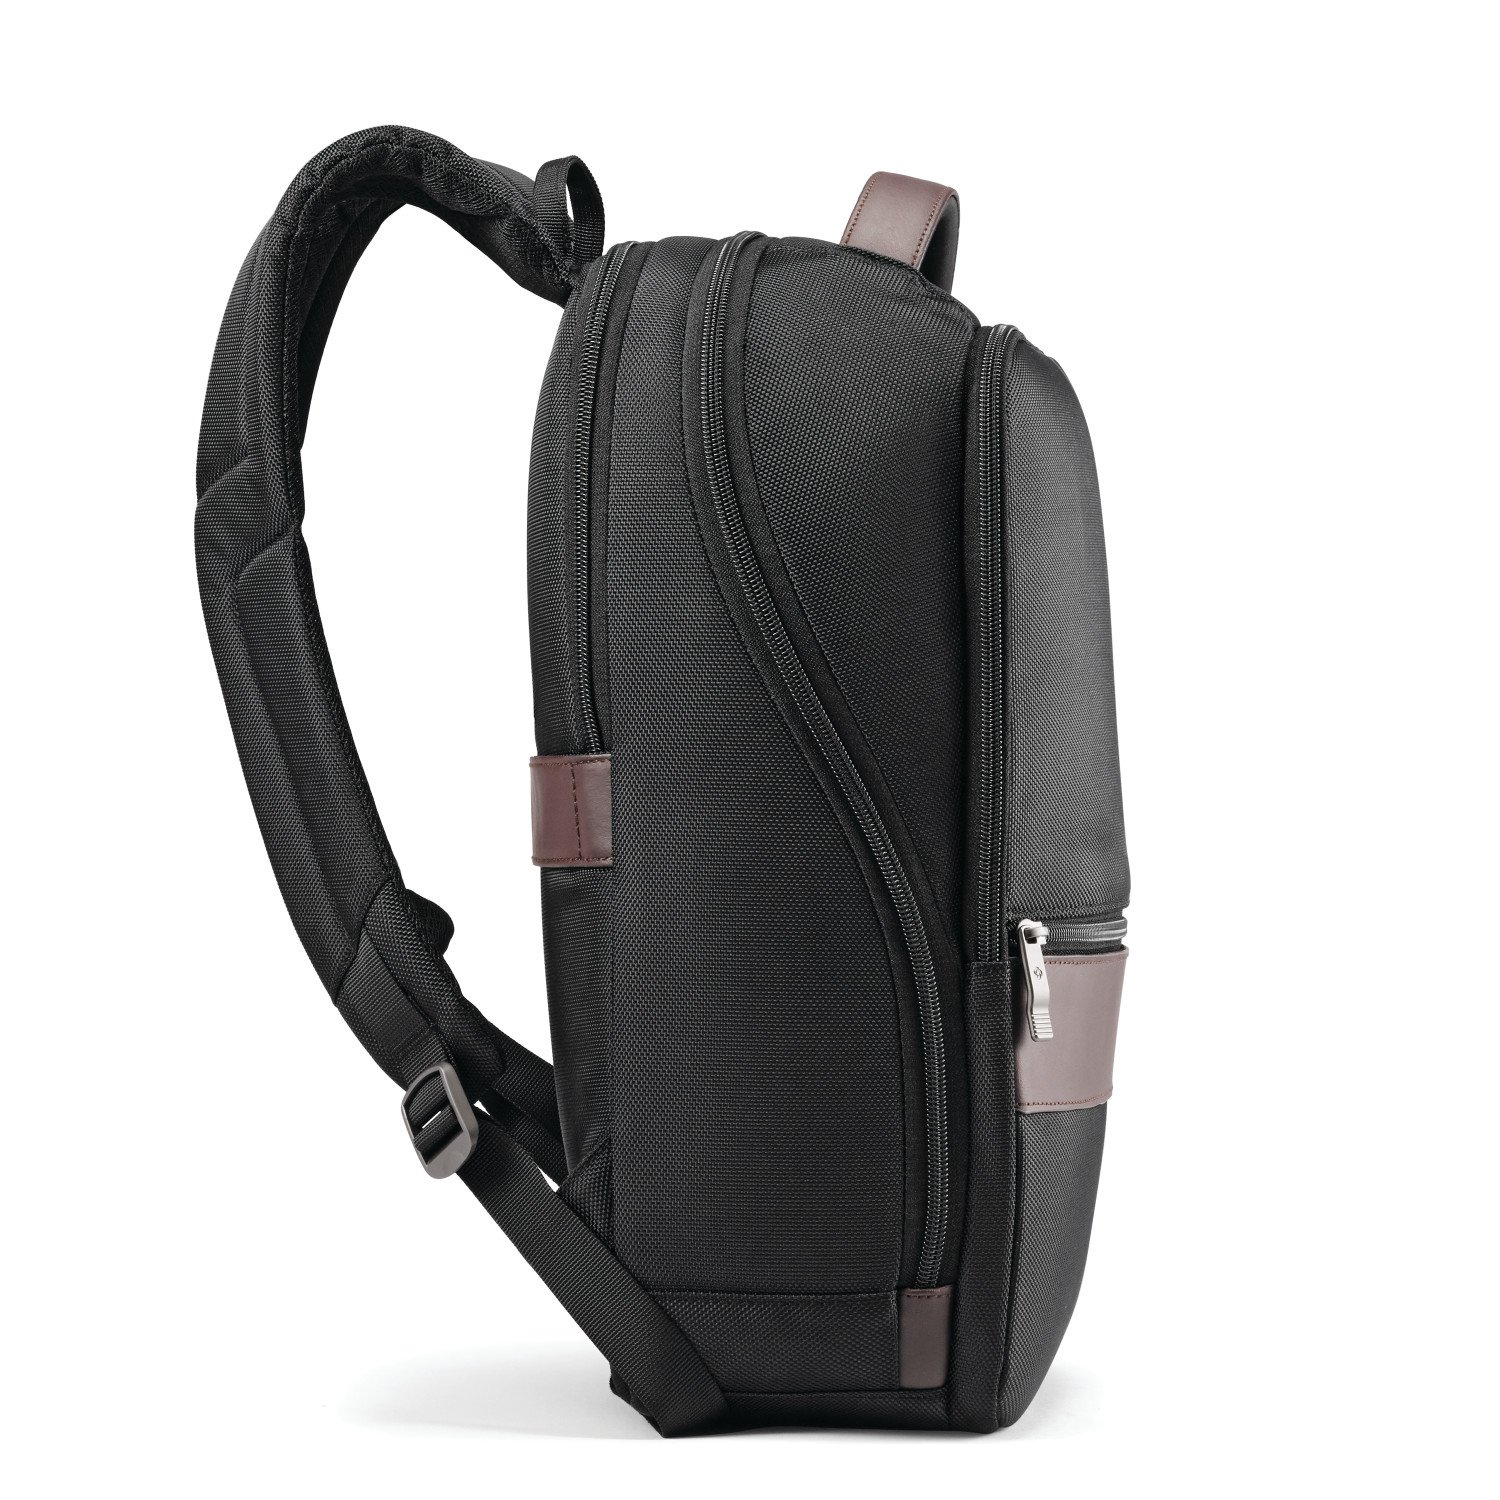 Samsonite Kombi Business Backpack, Black/Brown, 16.25 x 10.5 x 5-Inch